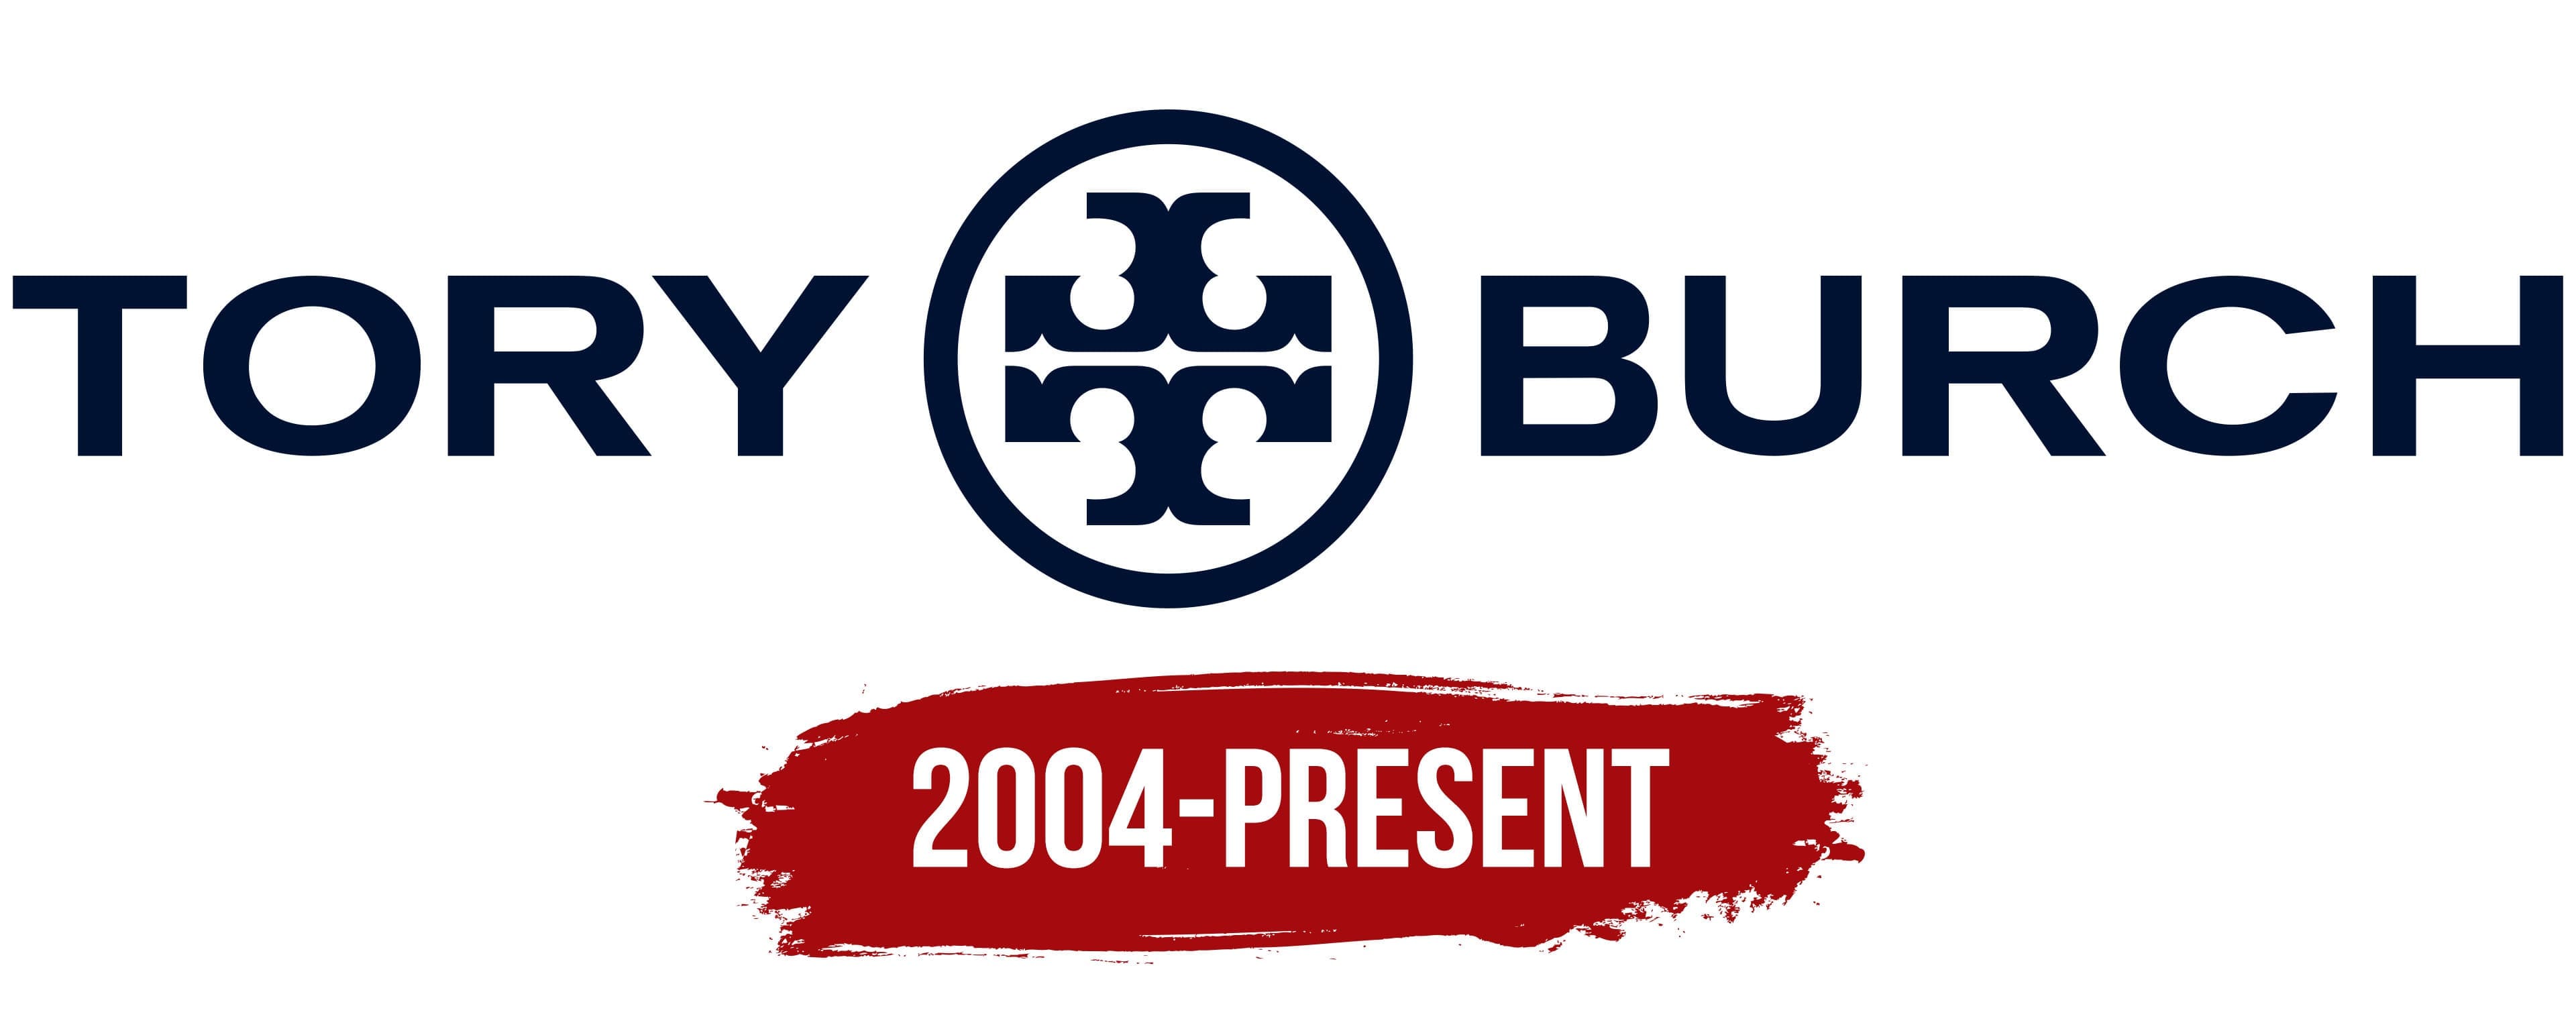 tory burch logo